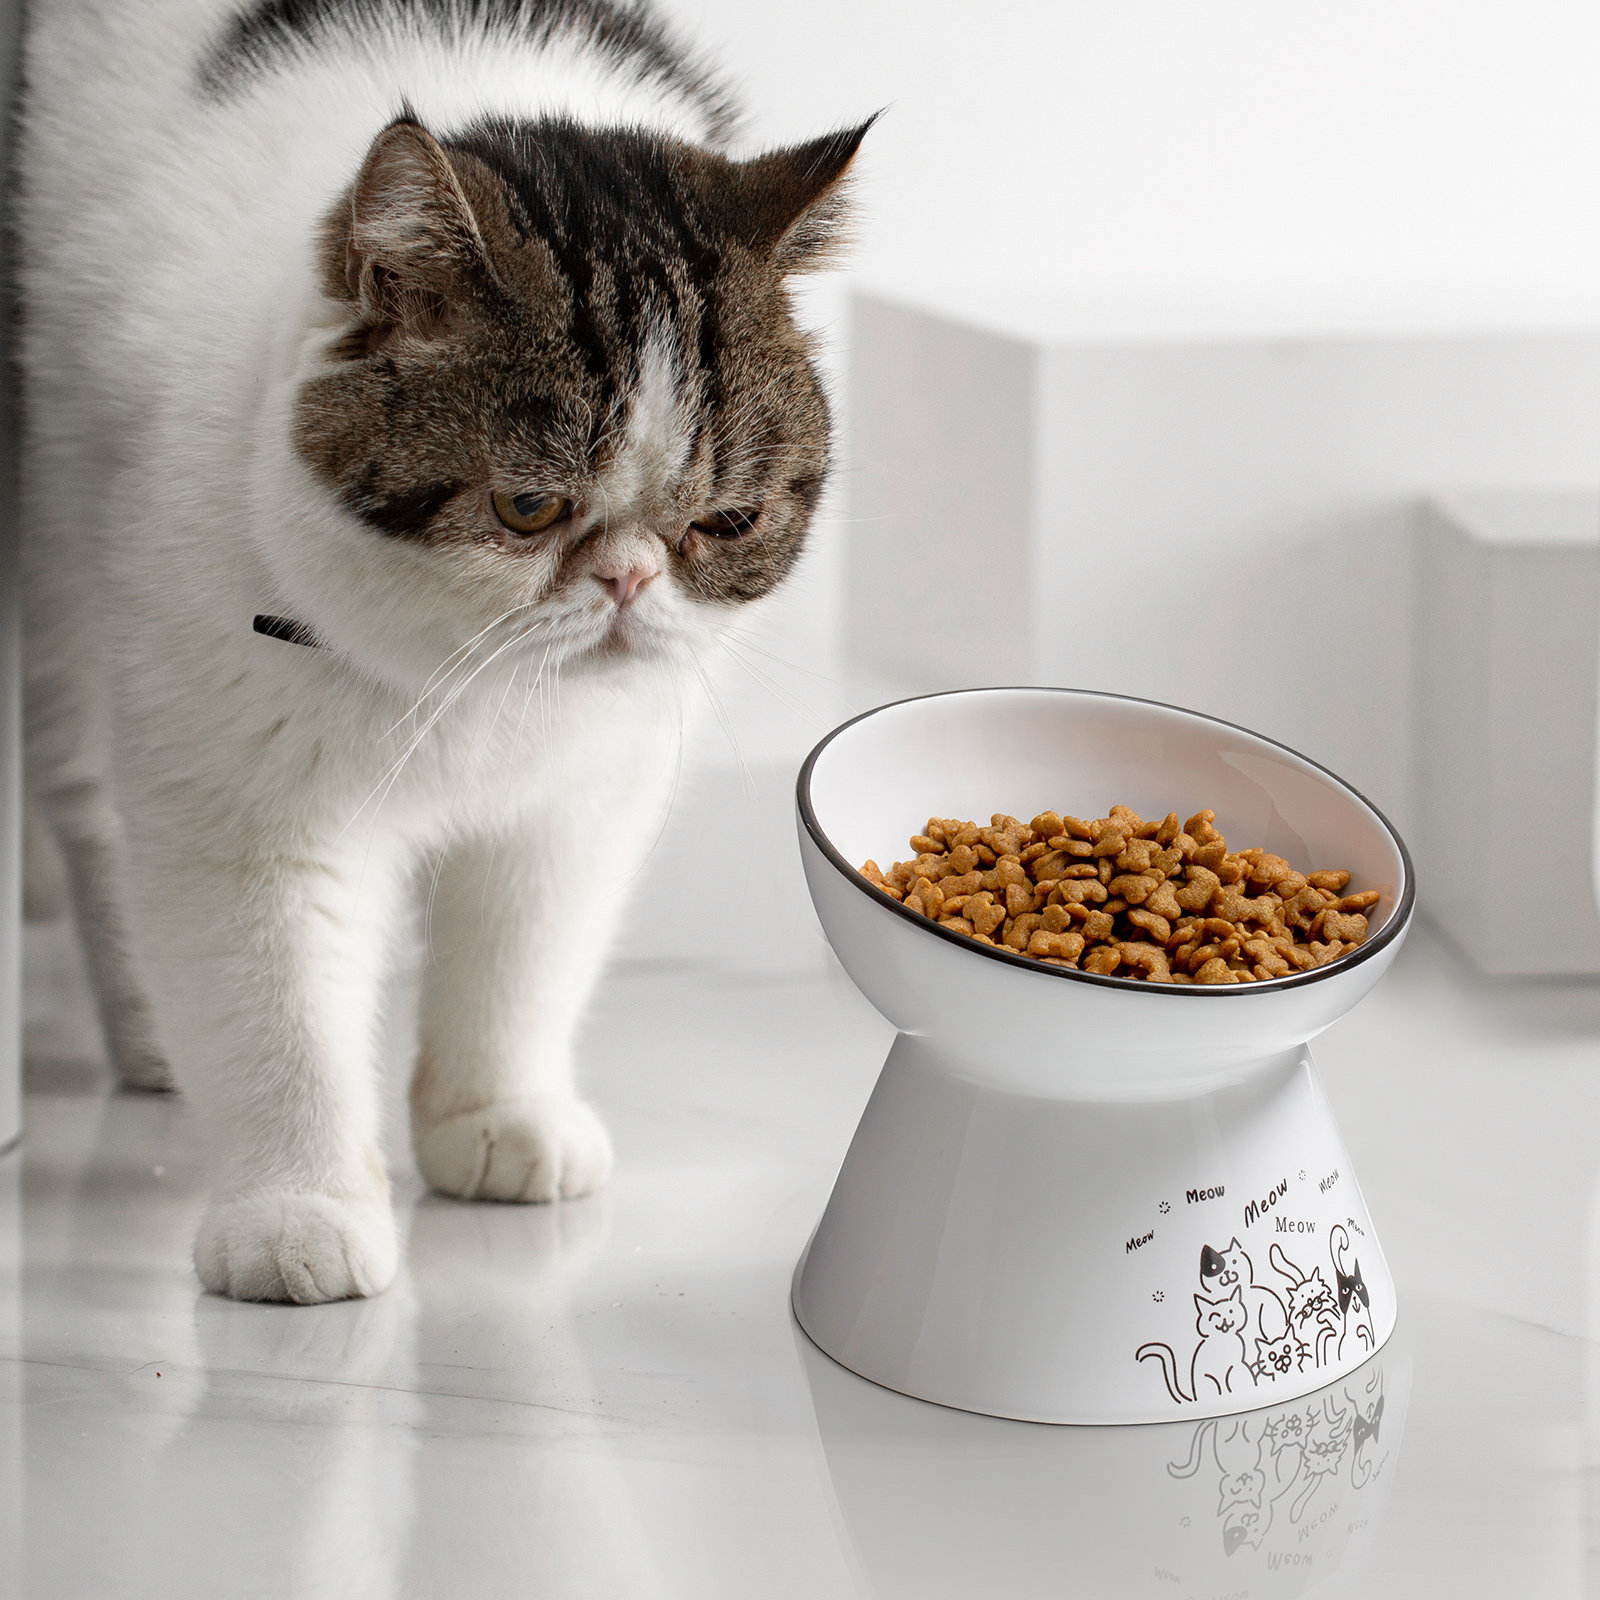 Buy Ergonomic Cat Feeding Bowls @ $22.99 - FREE SHIPPING